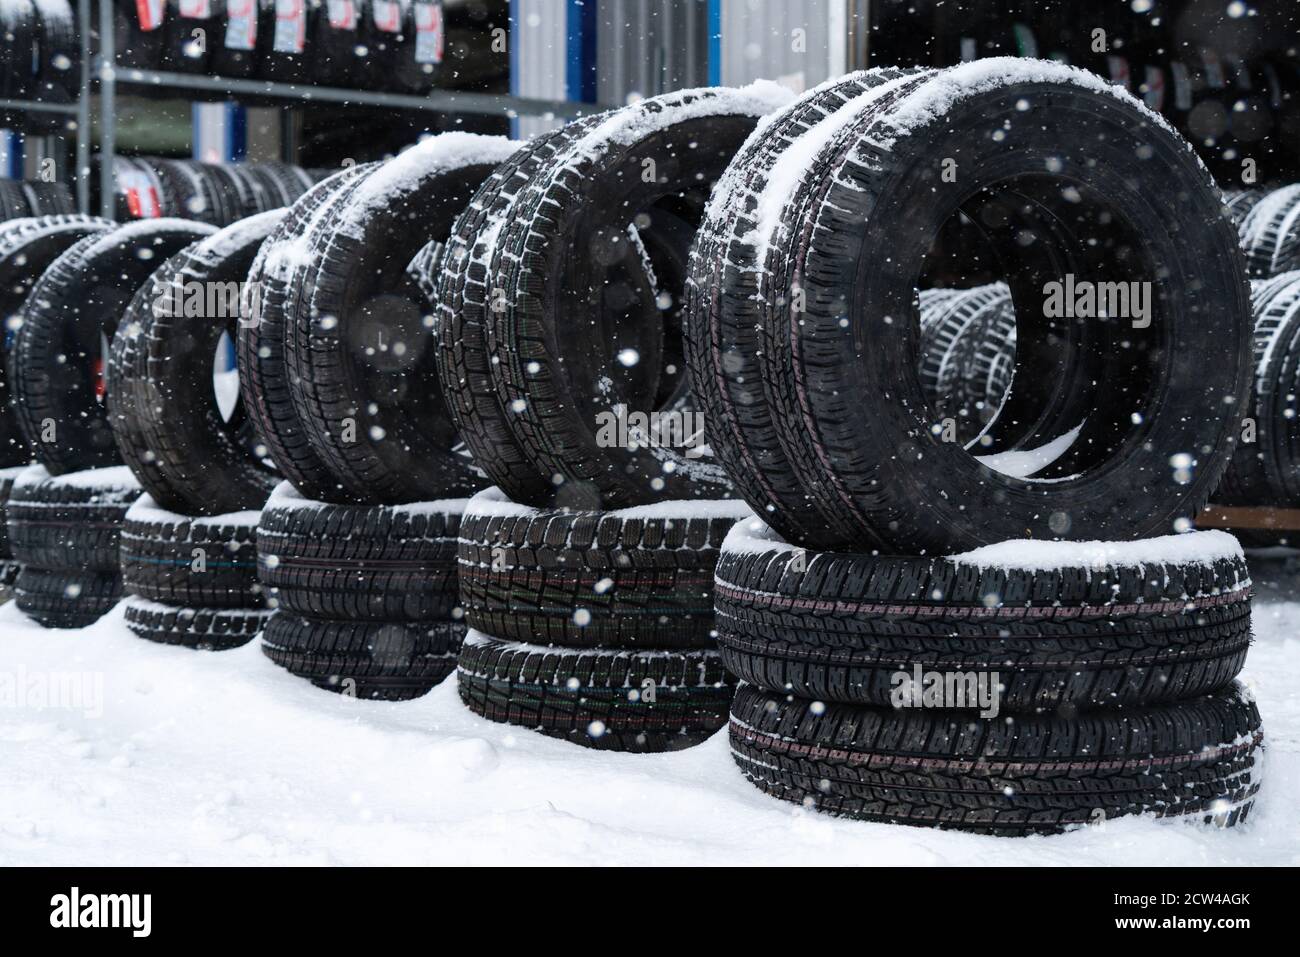 Tire and wheels shop on the street. Seasonal tire change. Stock Photo